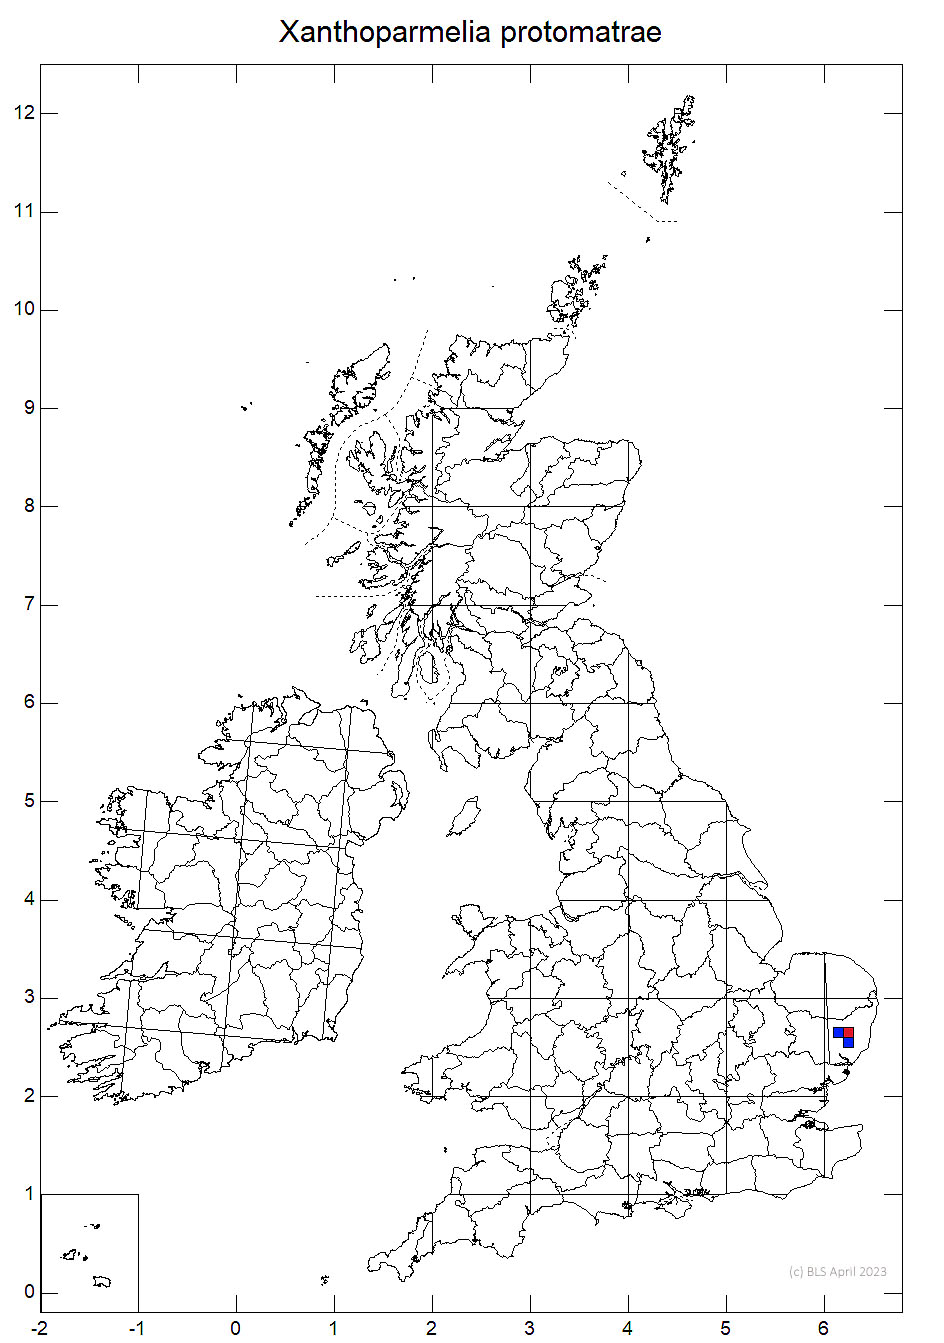 Xanthoparmelia protomatrae 10km sq distribution map